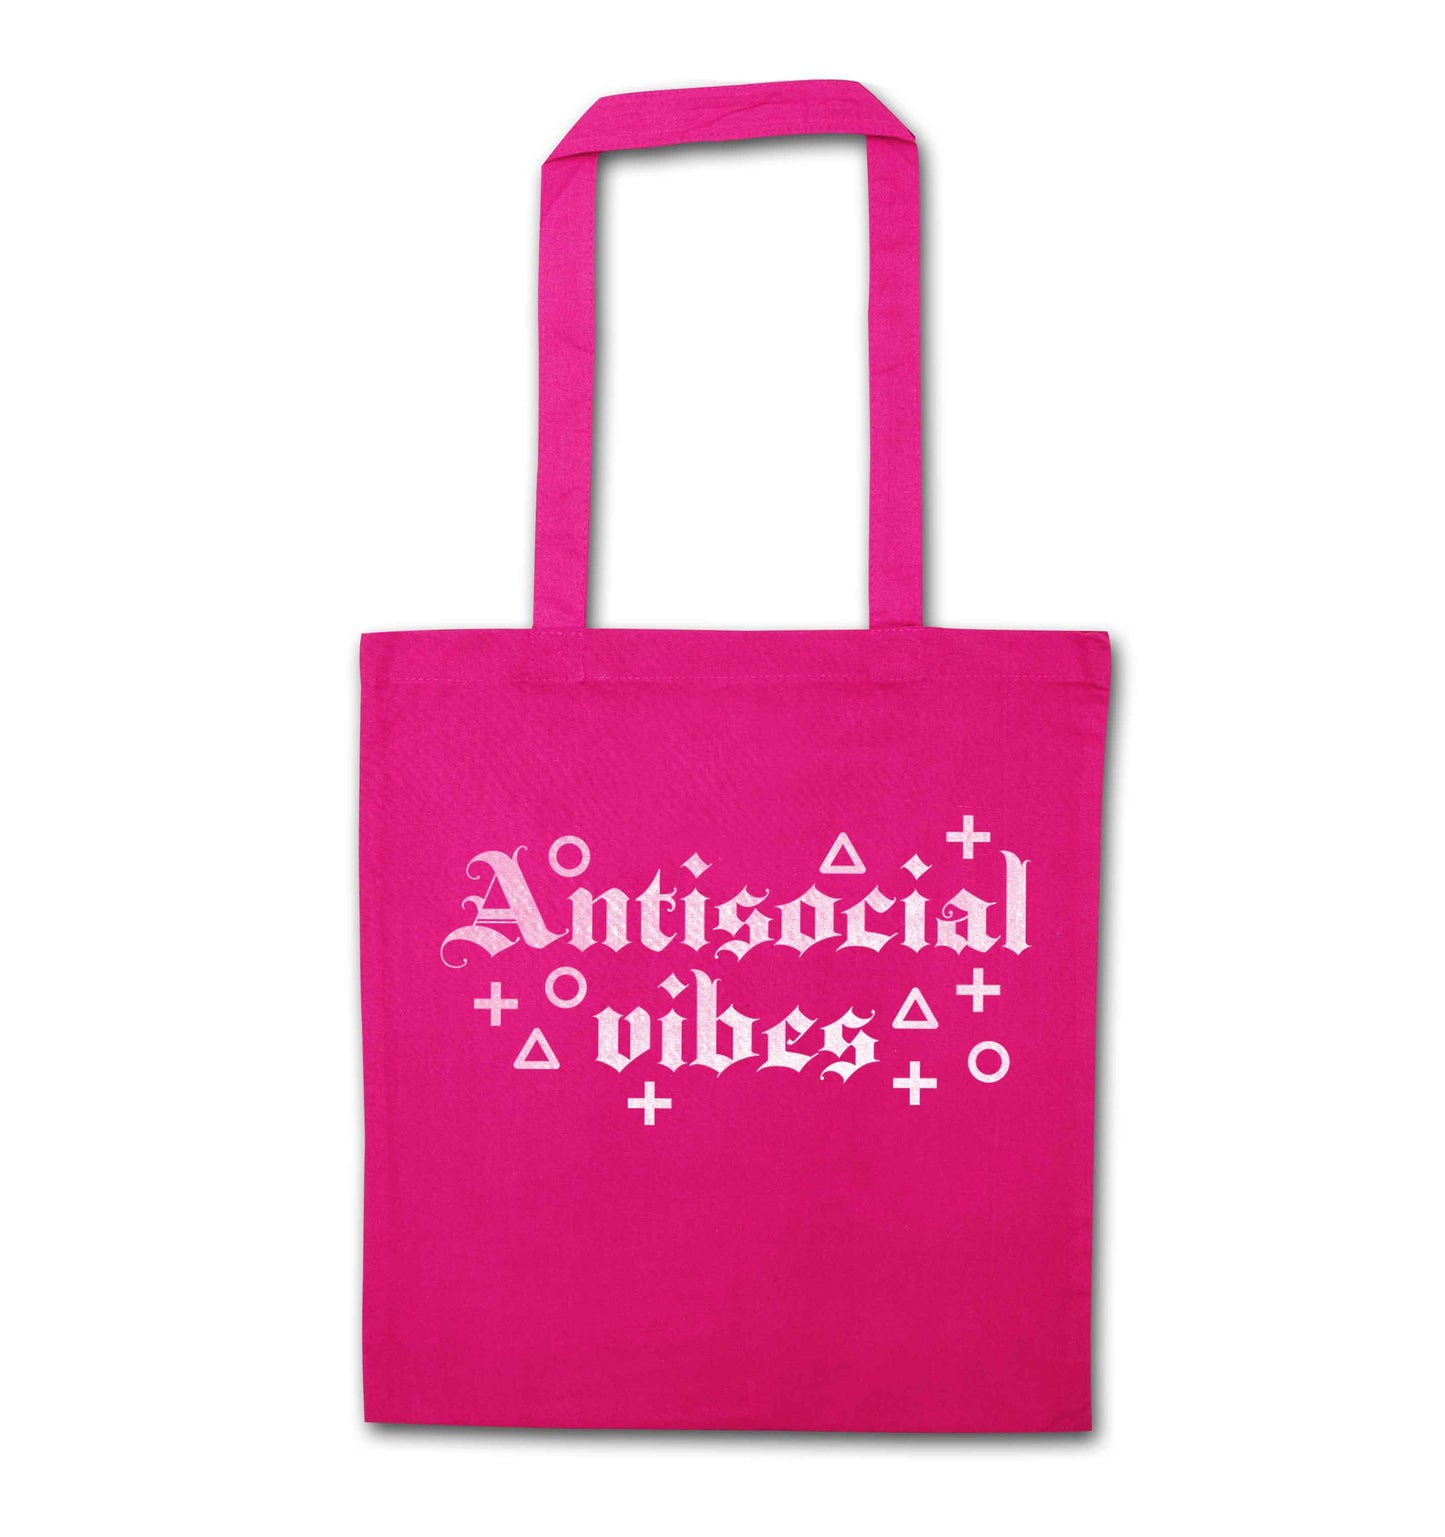 Antisocial vibes pink tote bag